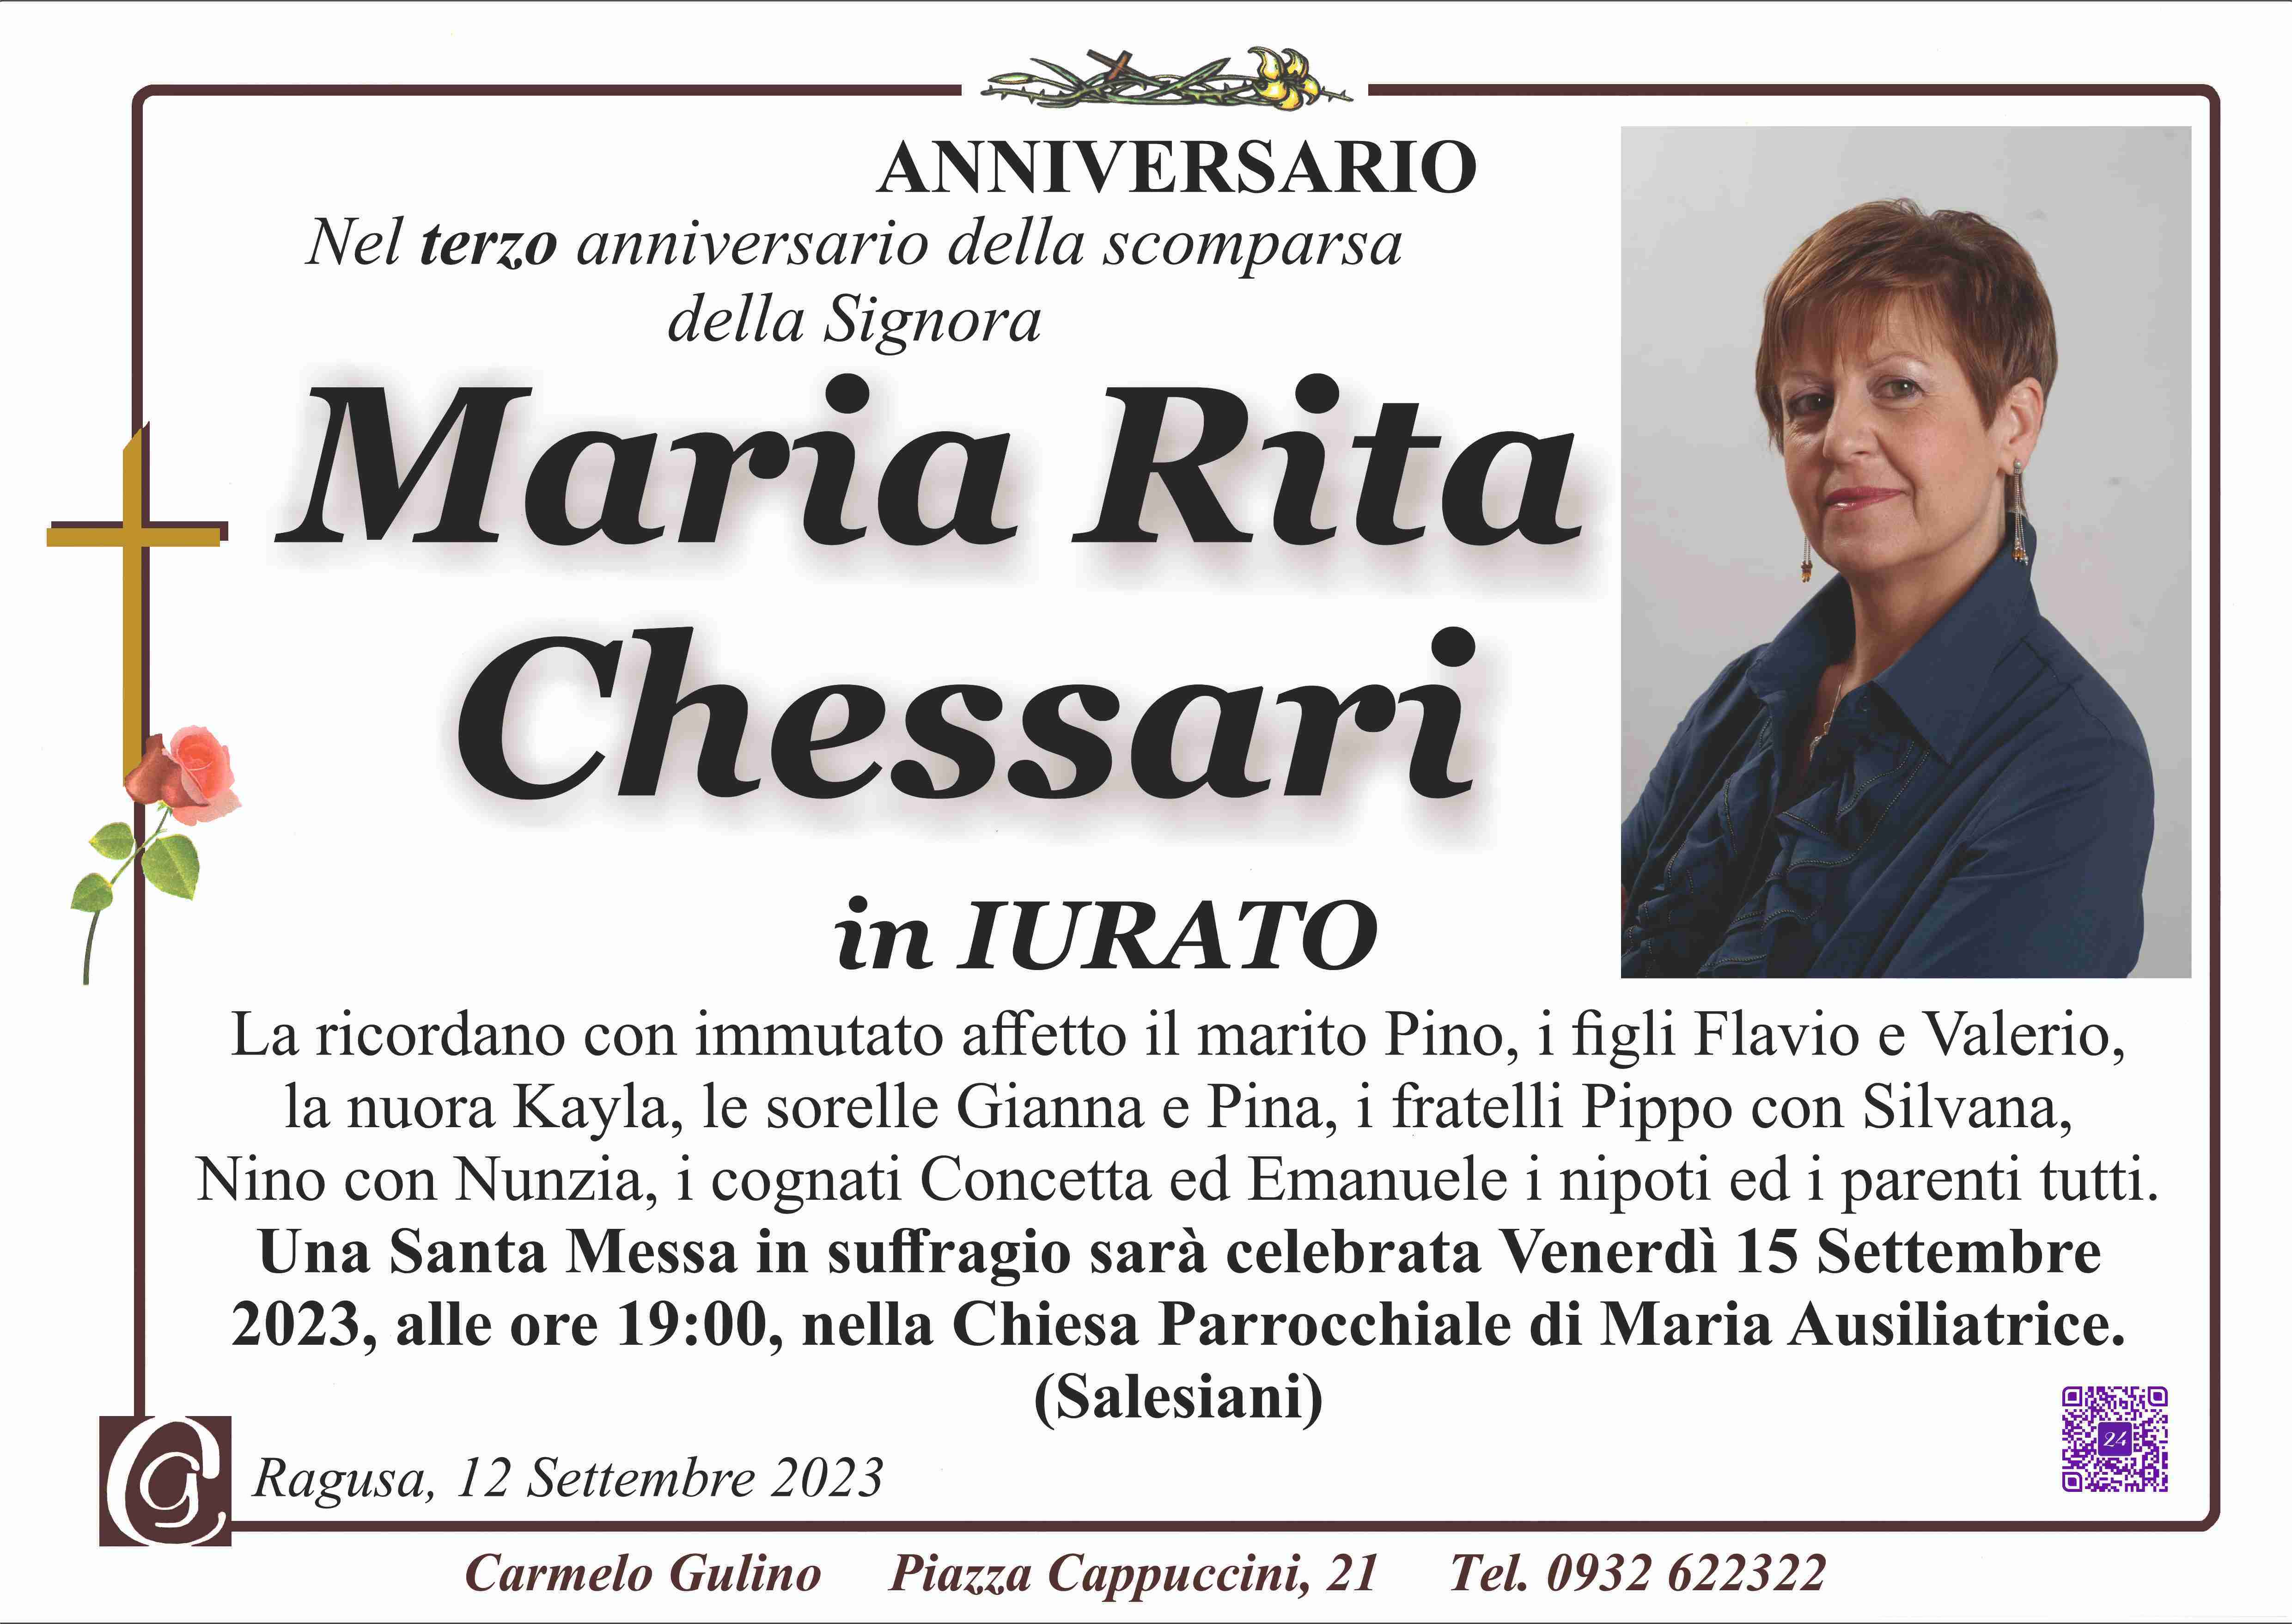 Maria Rita Chessari